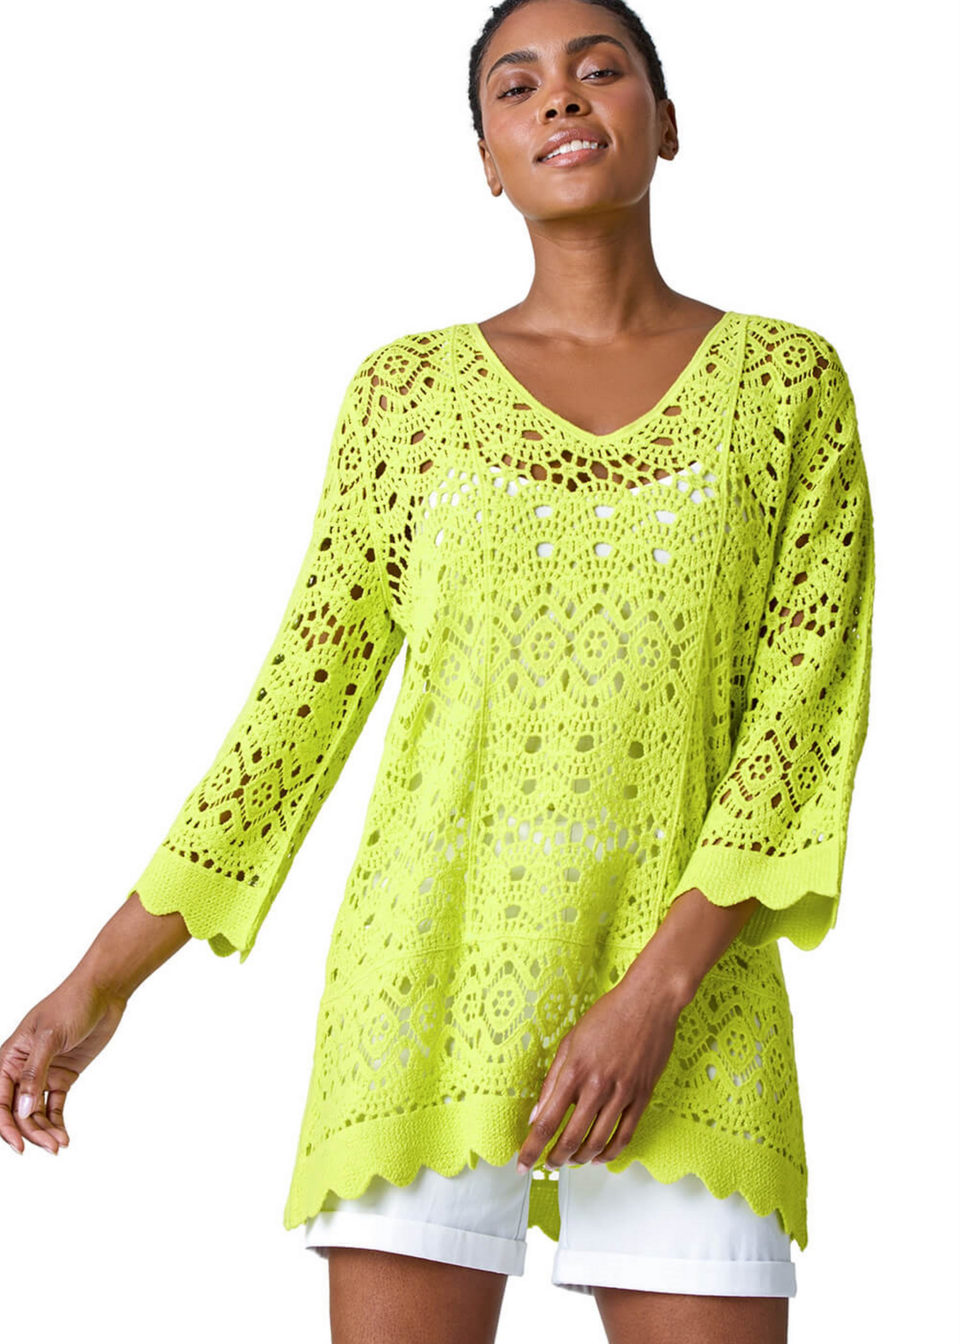 Roman Lime Cotton Crochet Tunic Top